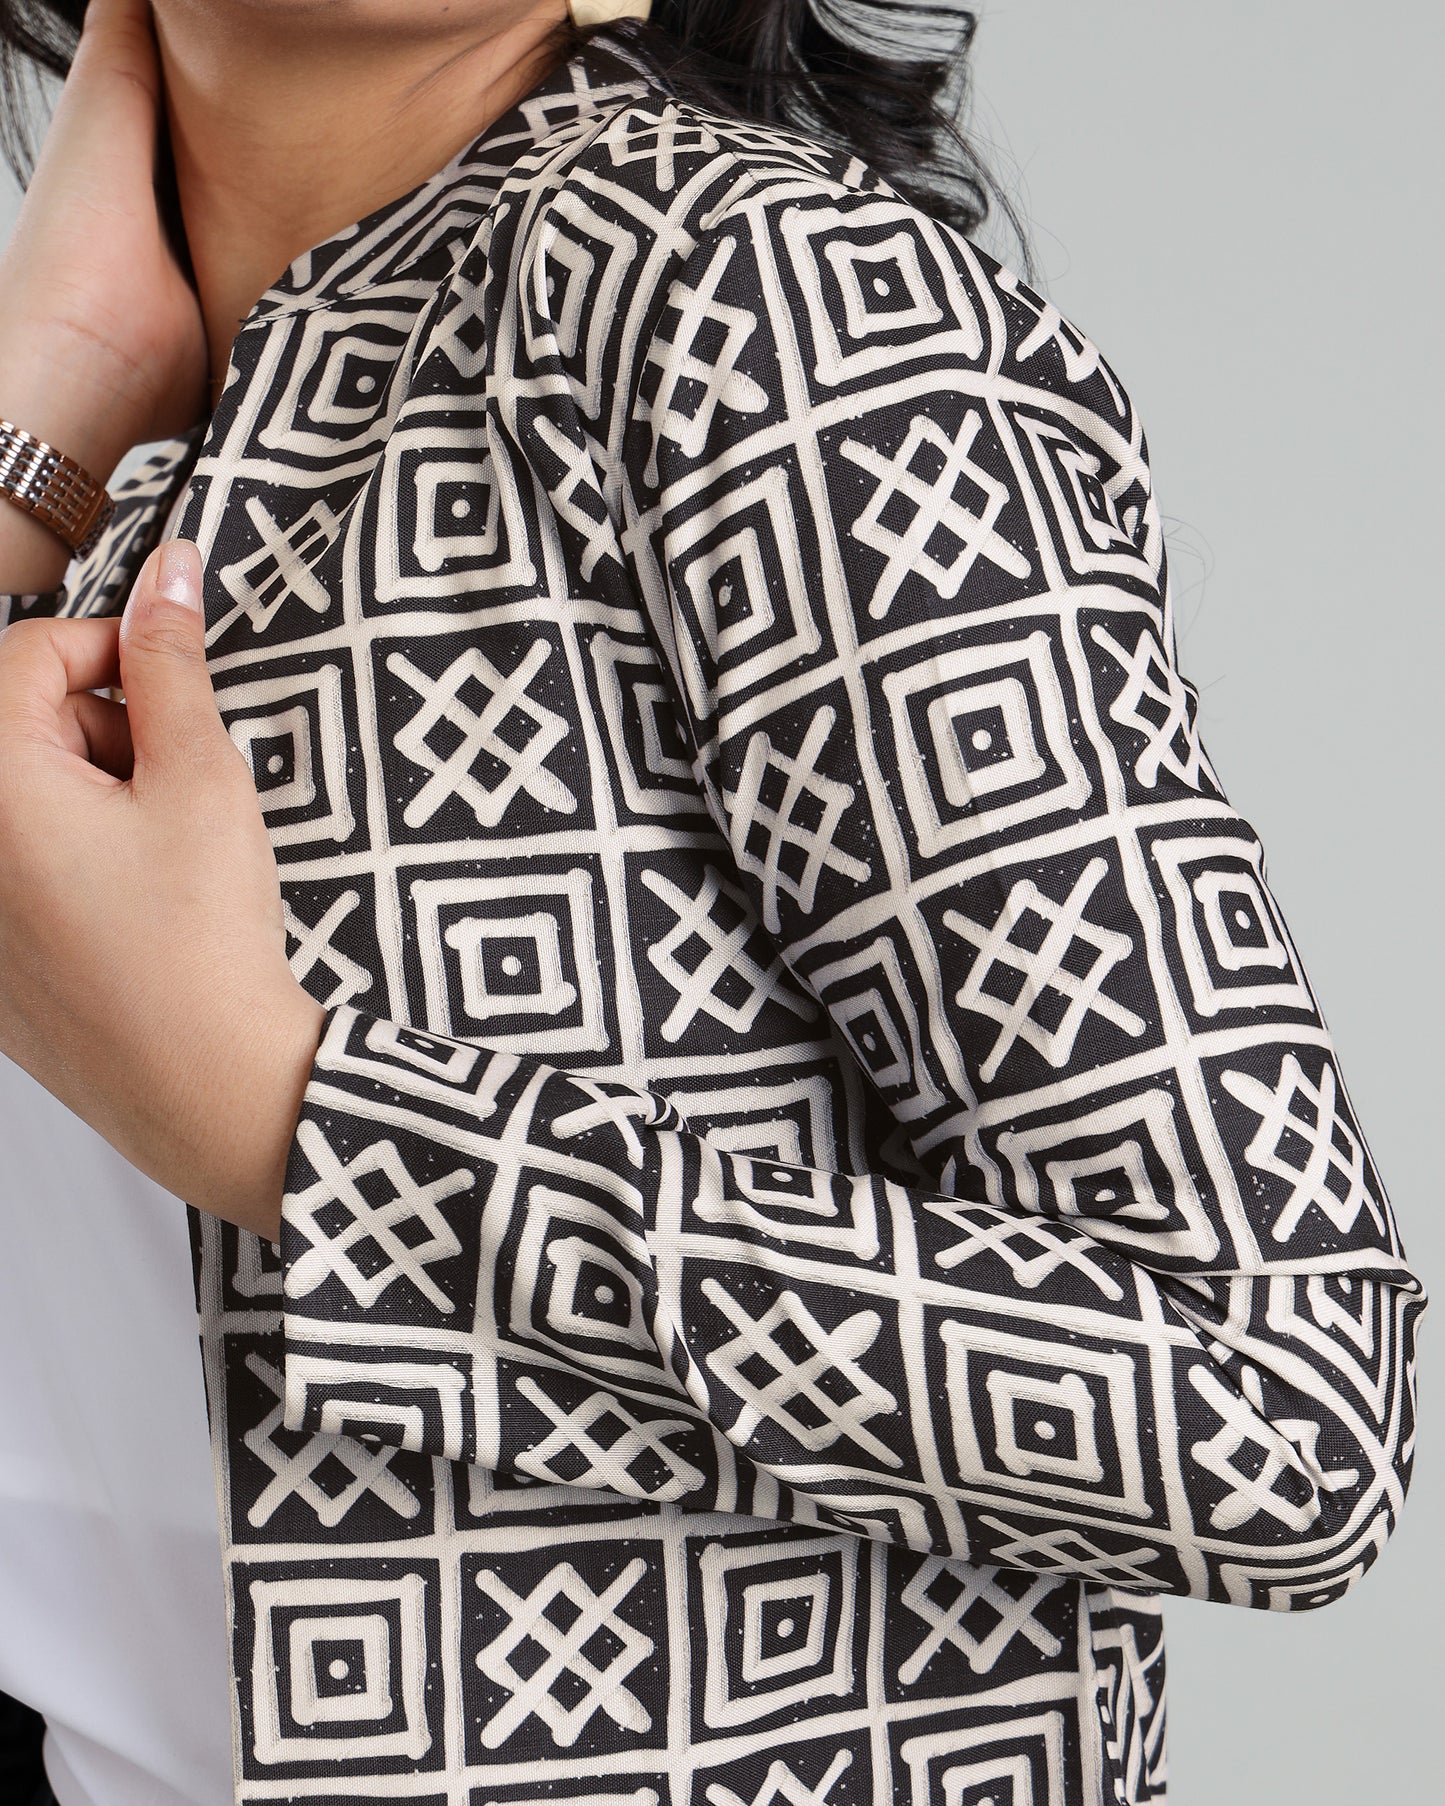 Pattern Power: Rock This Geometric Women's Jacket